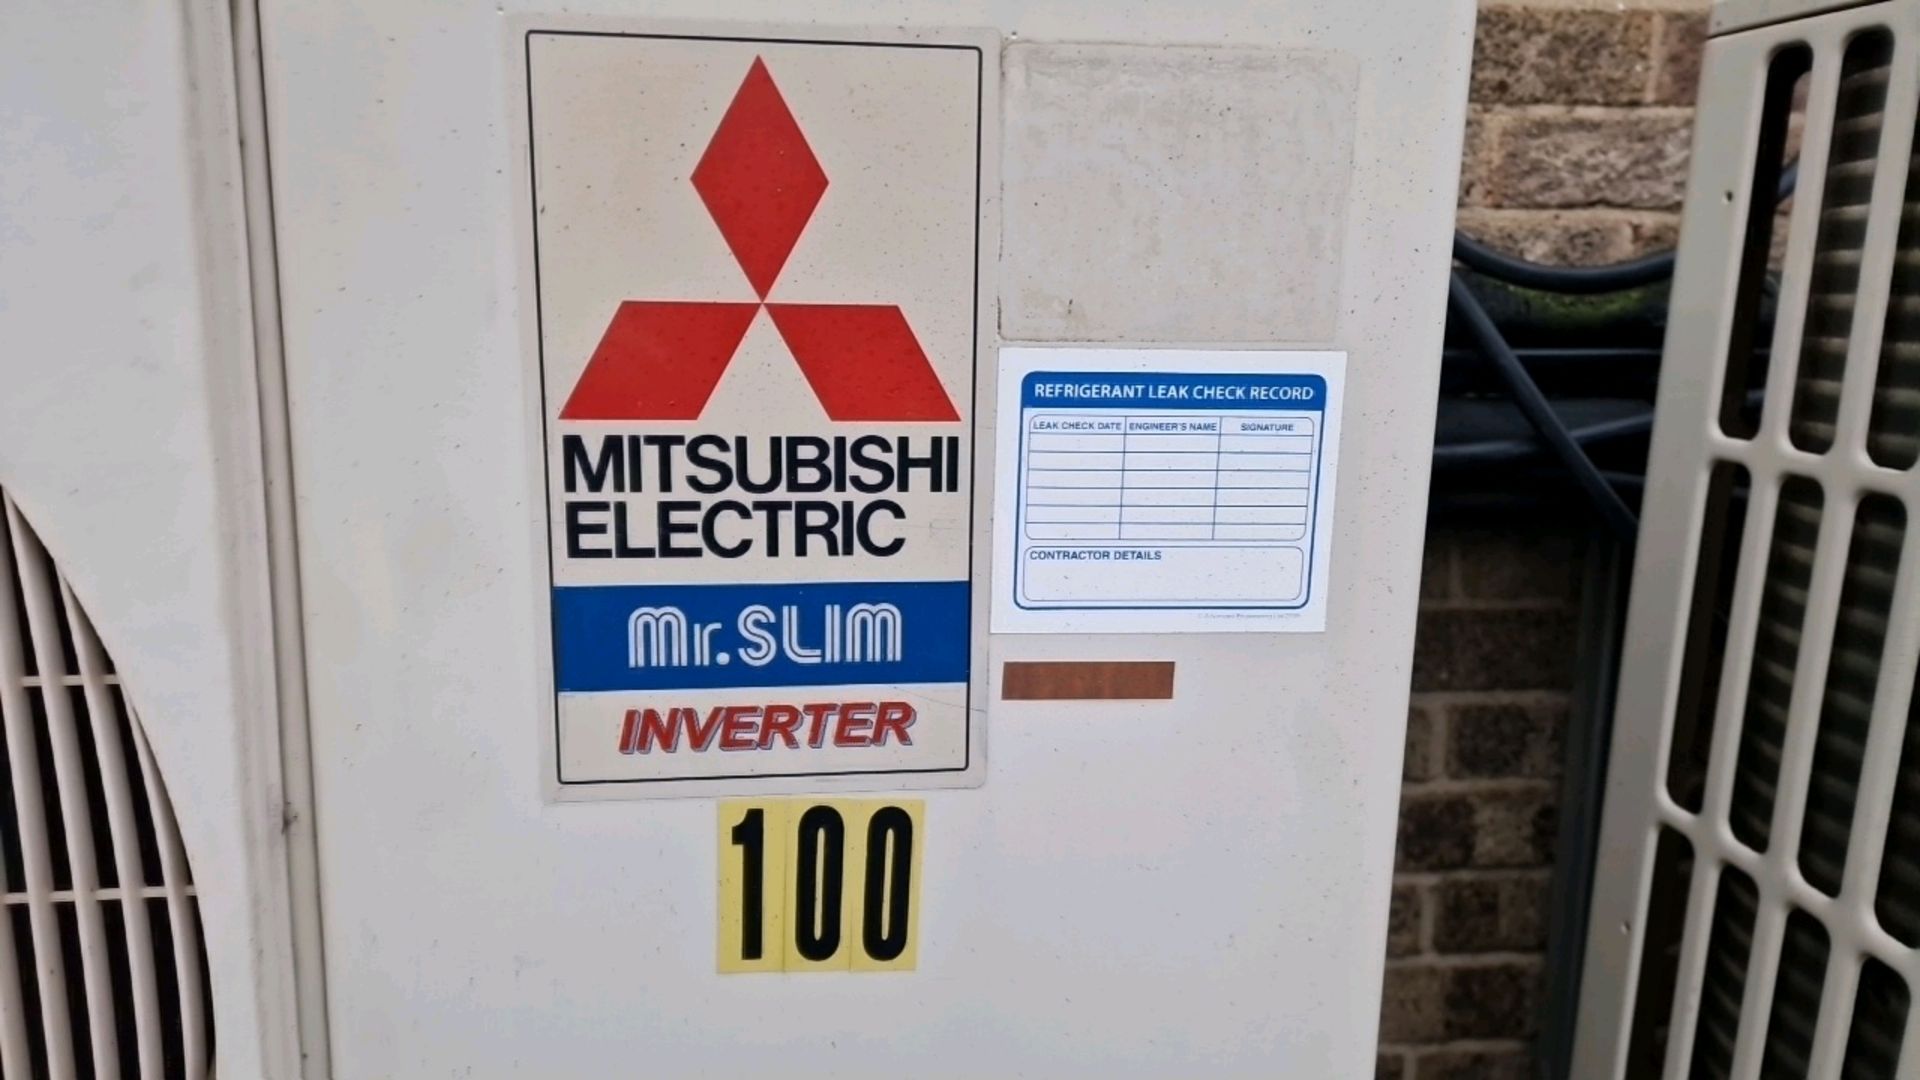 Mitsubishi Outdoor Aircon Unit - Image 2 of 3